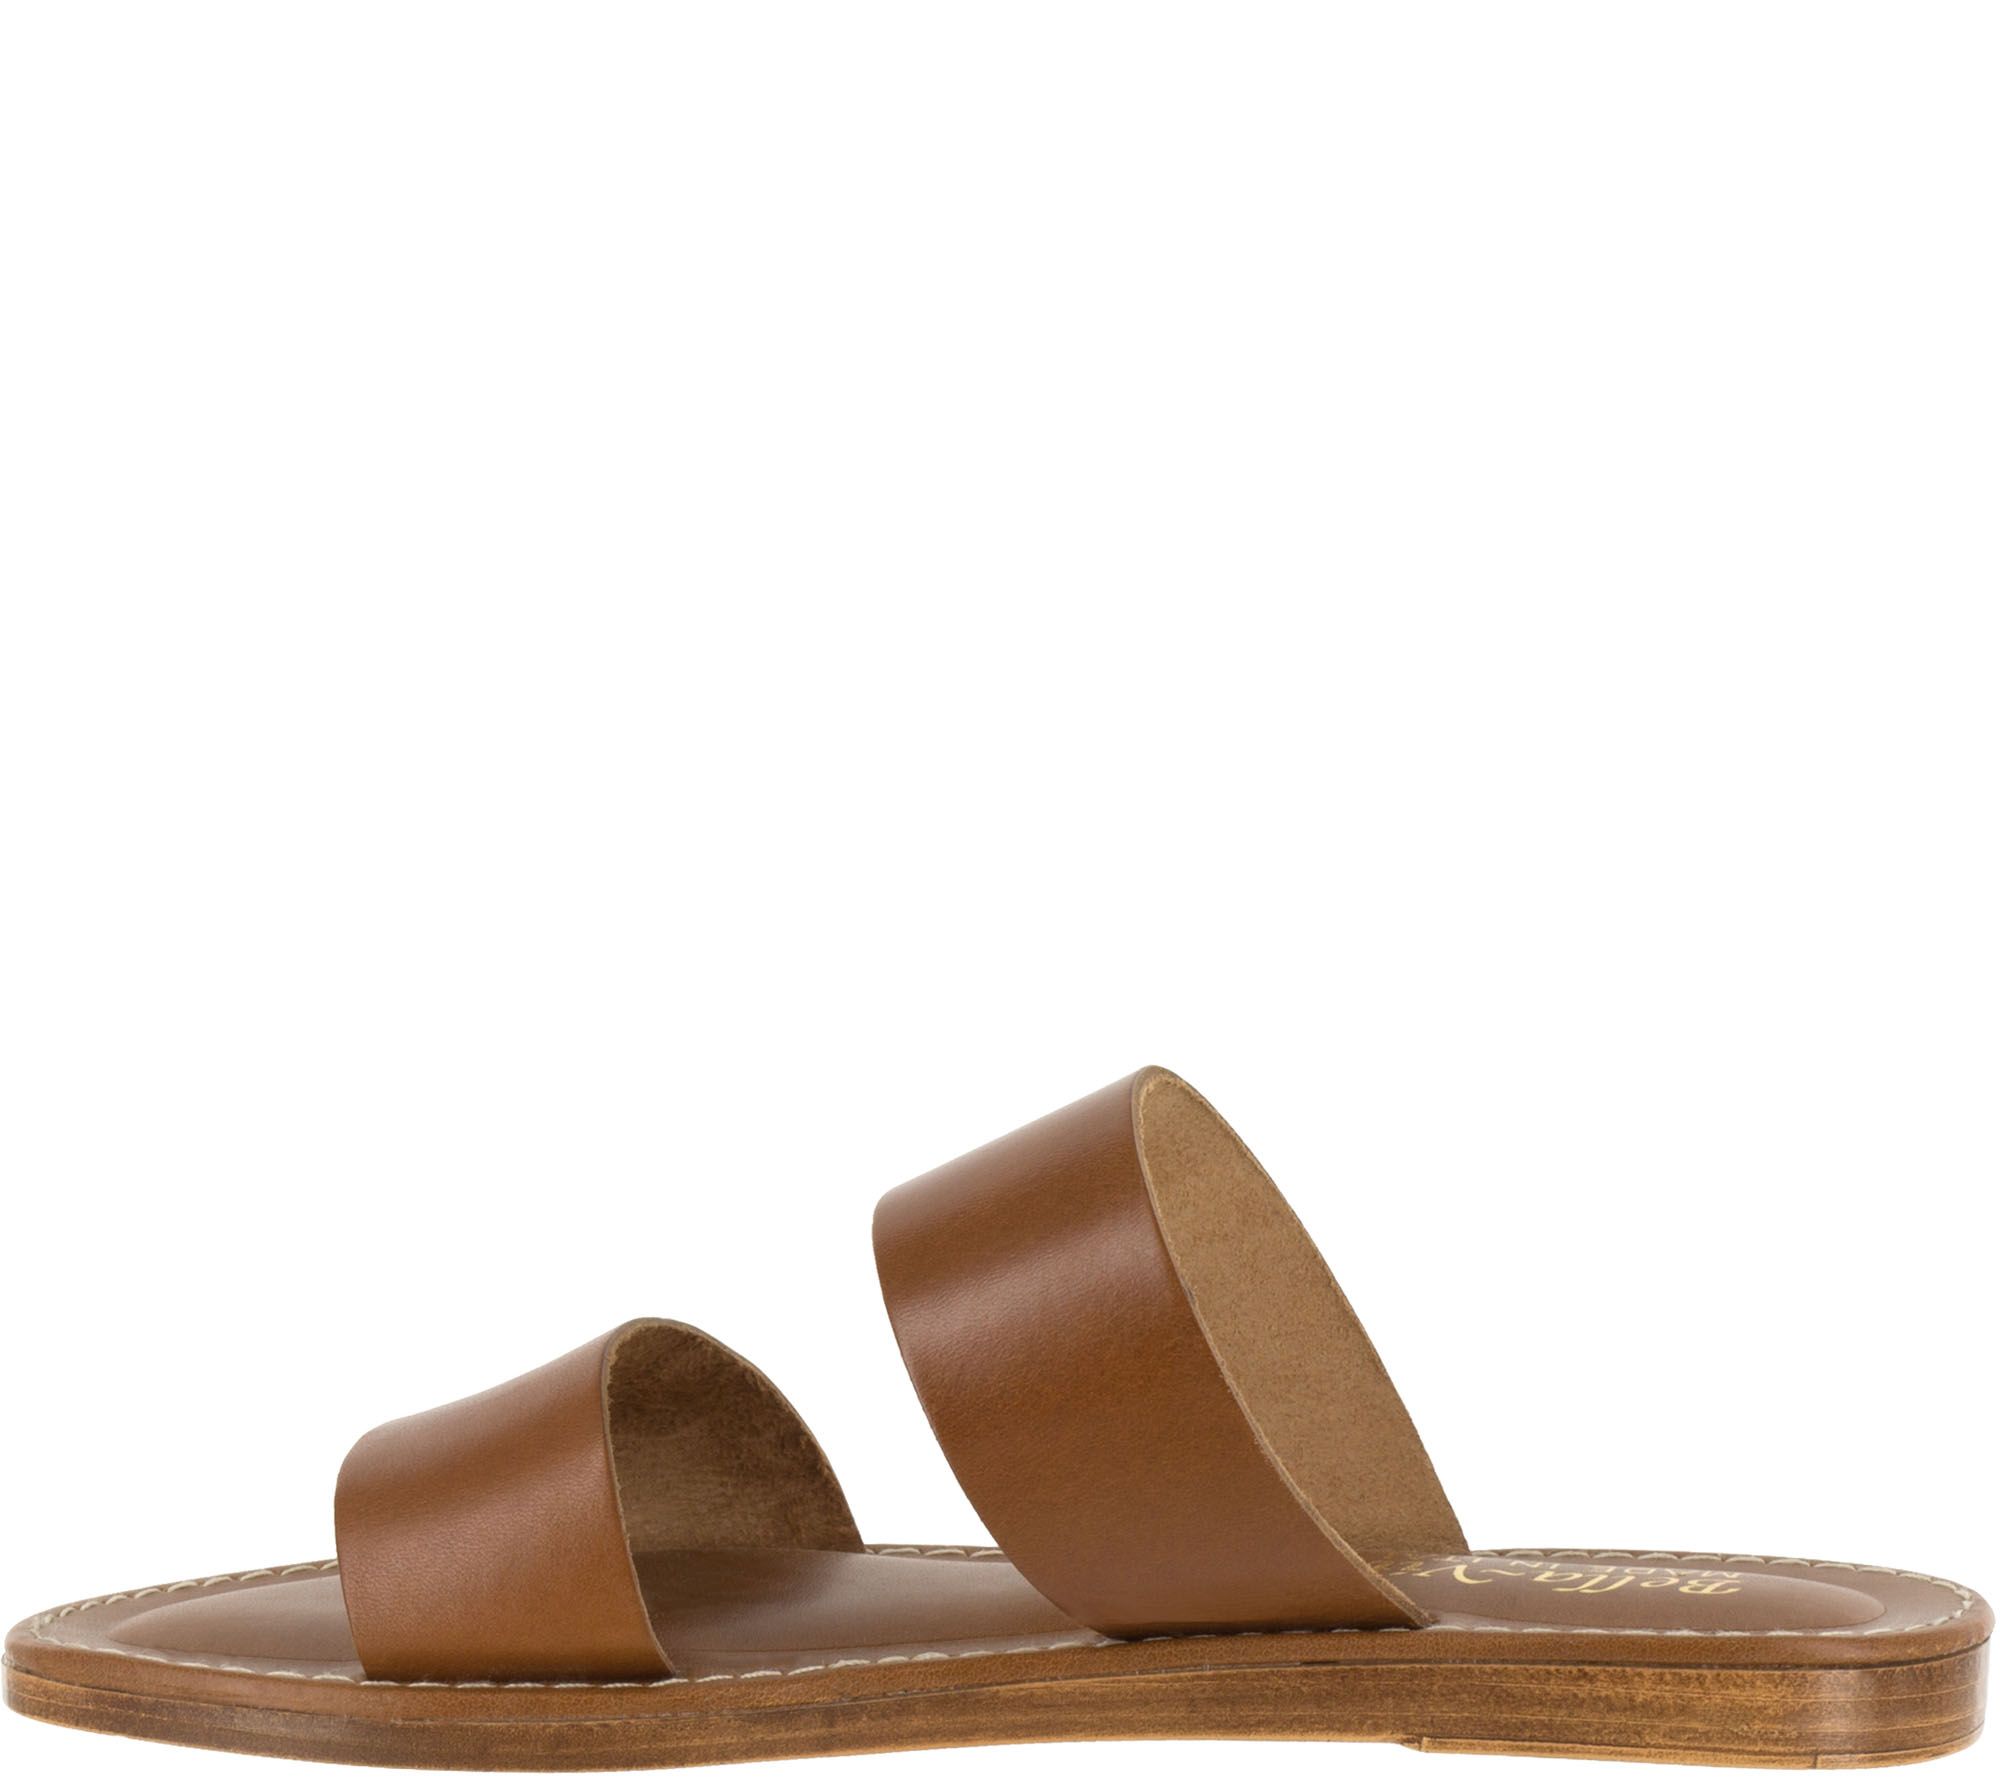 Bella Vita Leather Slide Sandals - Imo-Italy - QVC.com